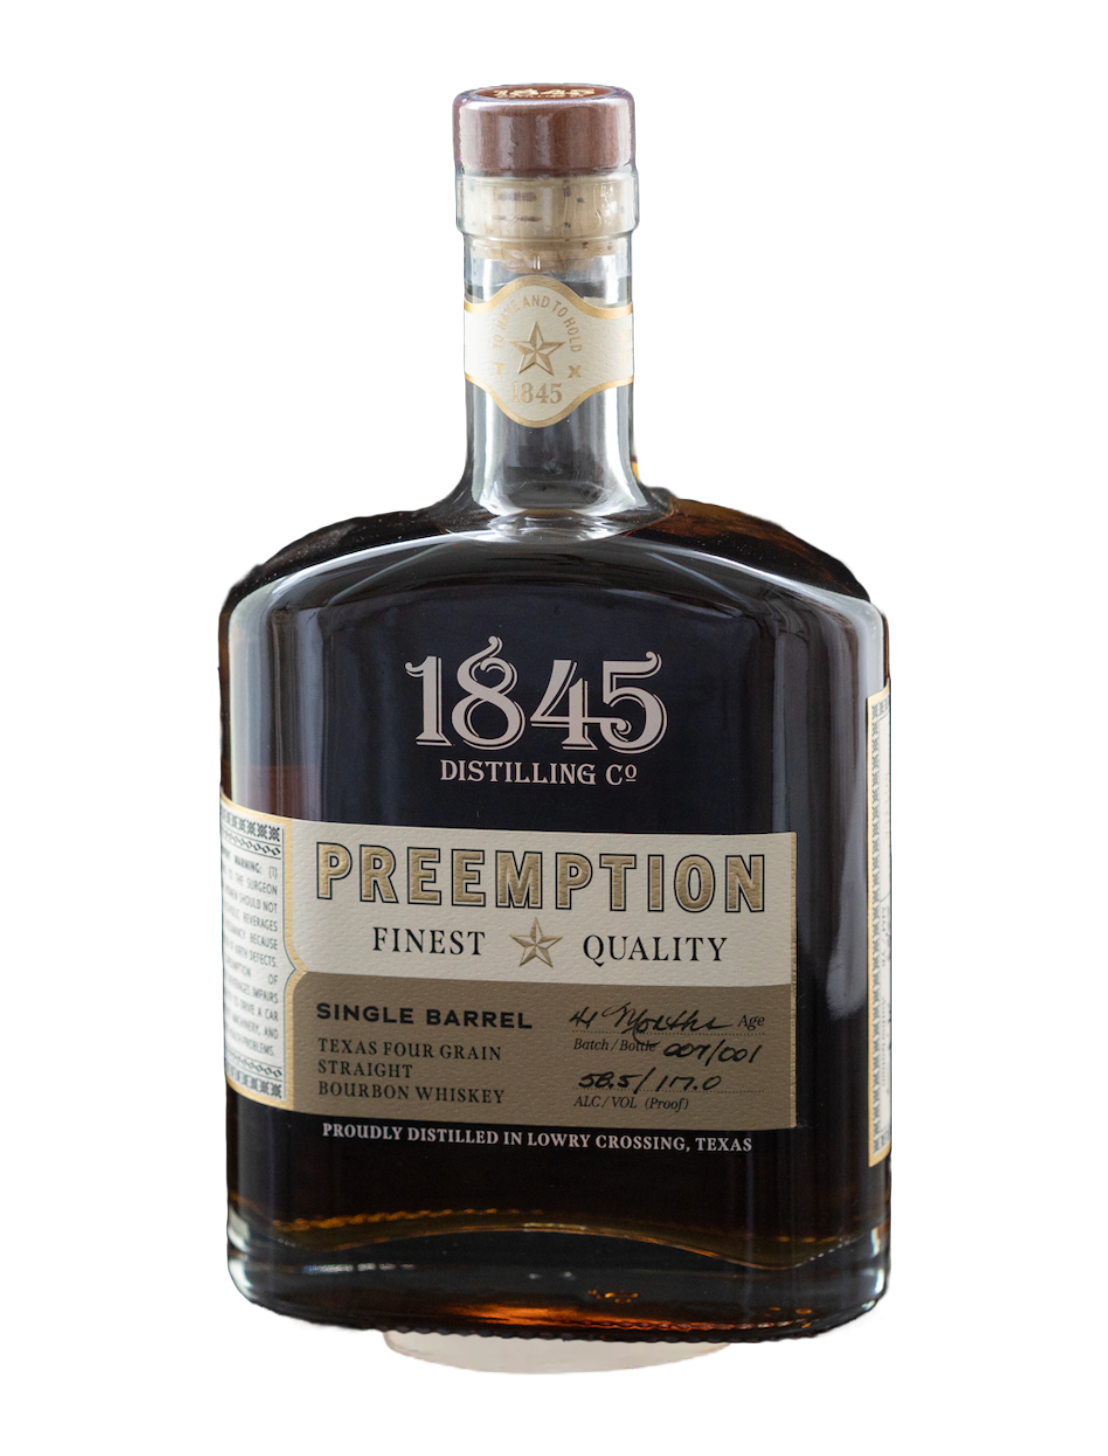 An elegant bottle of 1845 Distilling Preemption Texas Straight Bourbon Whiskey in front of a plain white baackground